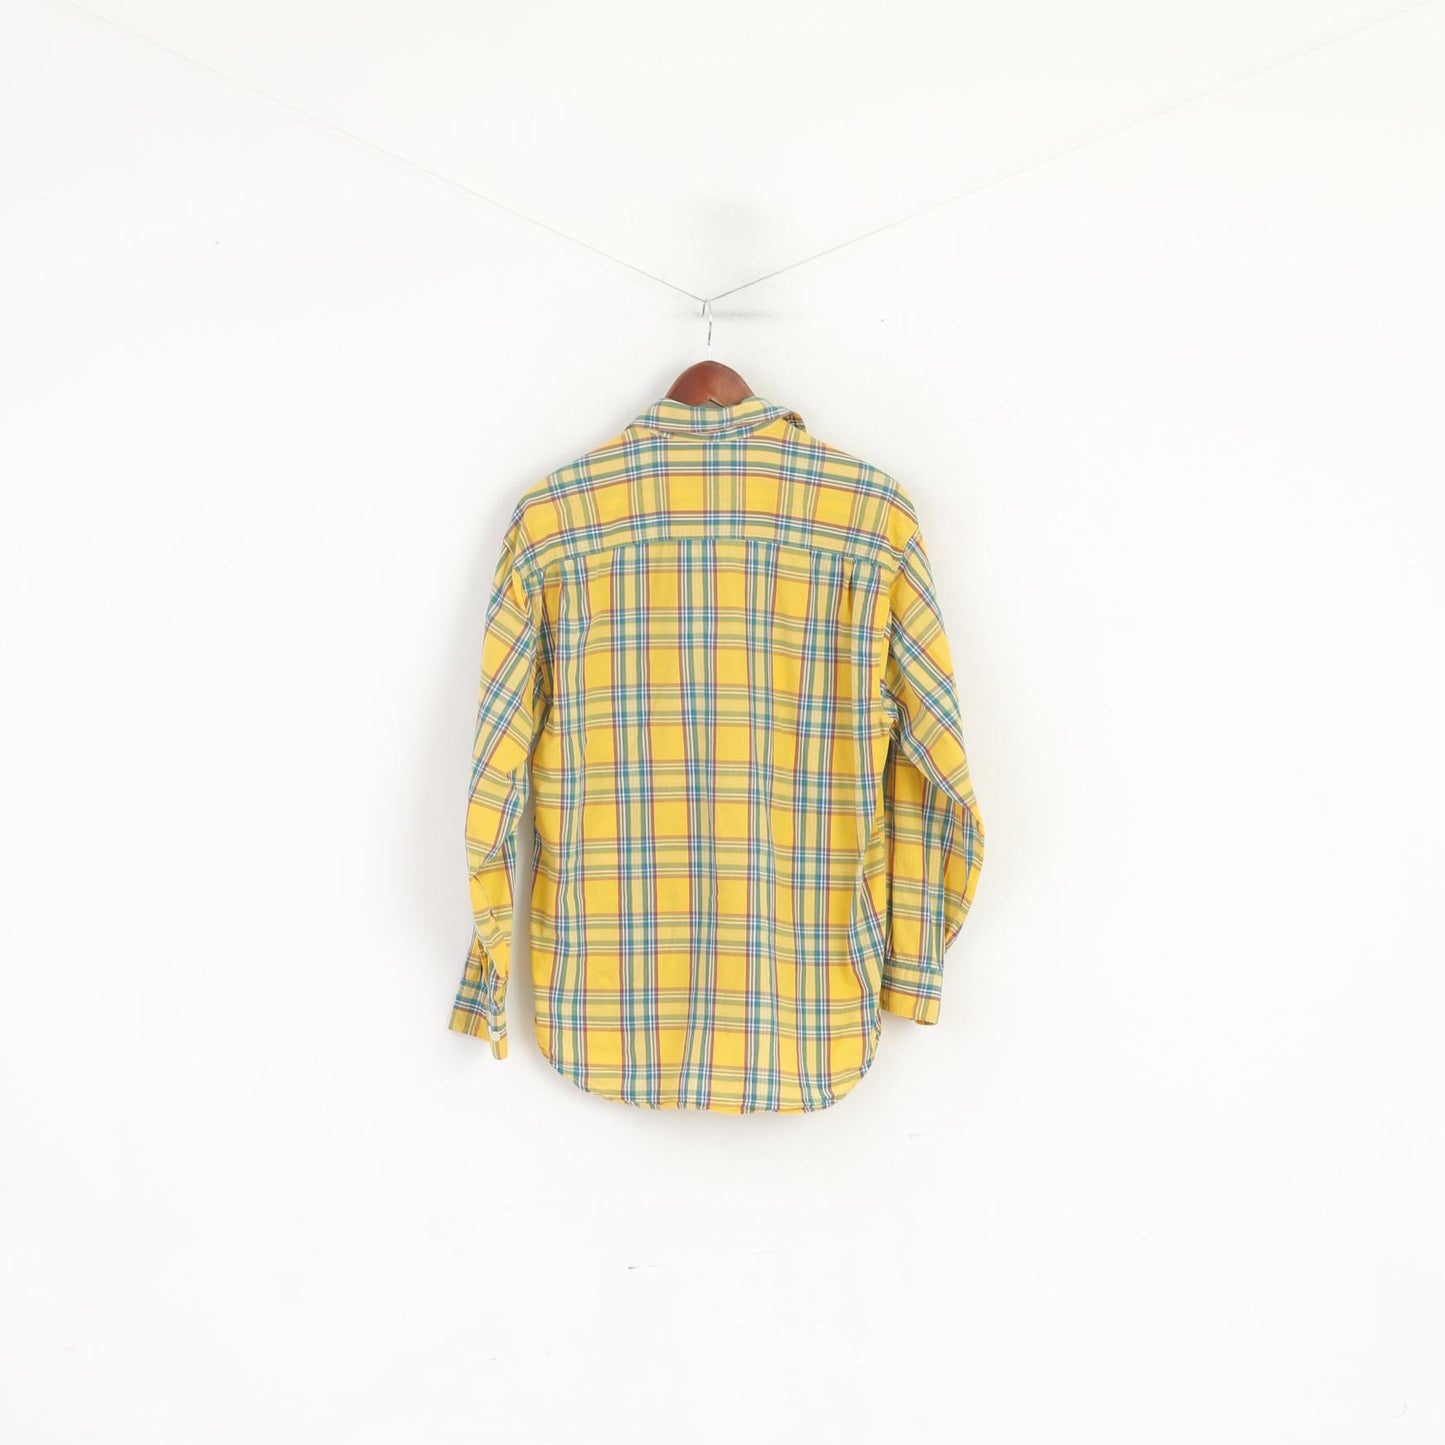 Peak Performance Men S Casual Shirt Yellow Check Rugged Mountainwear Cotton Top